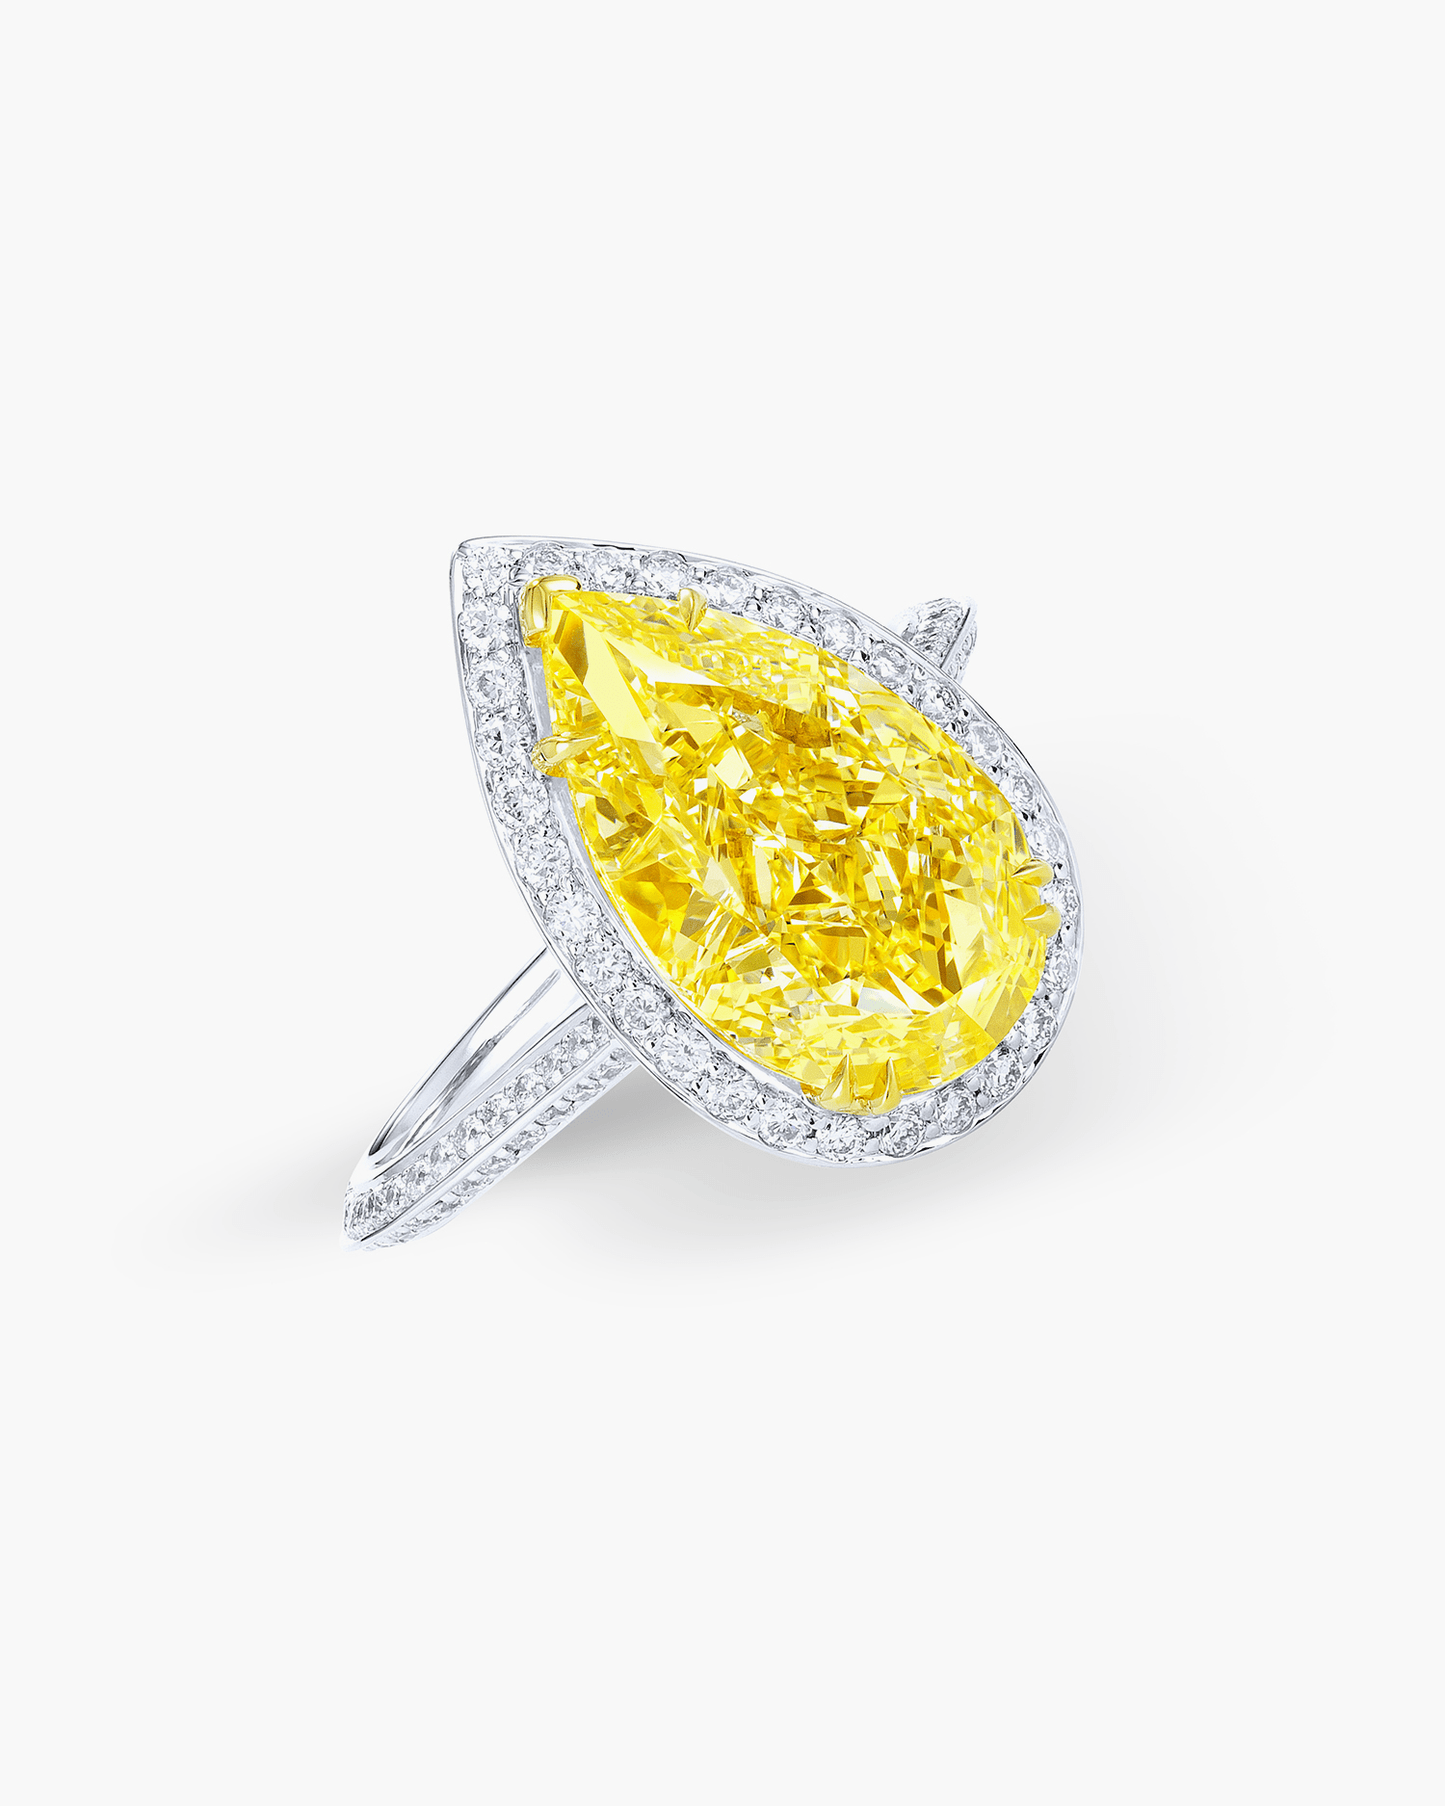 3.71 carat Pear Shape Yellow and White Diamond Ring